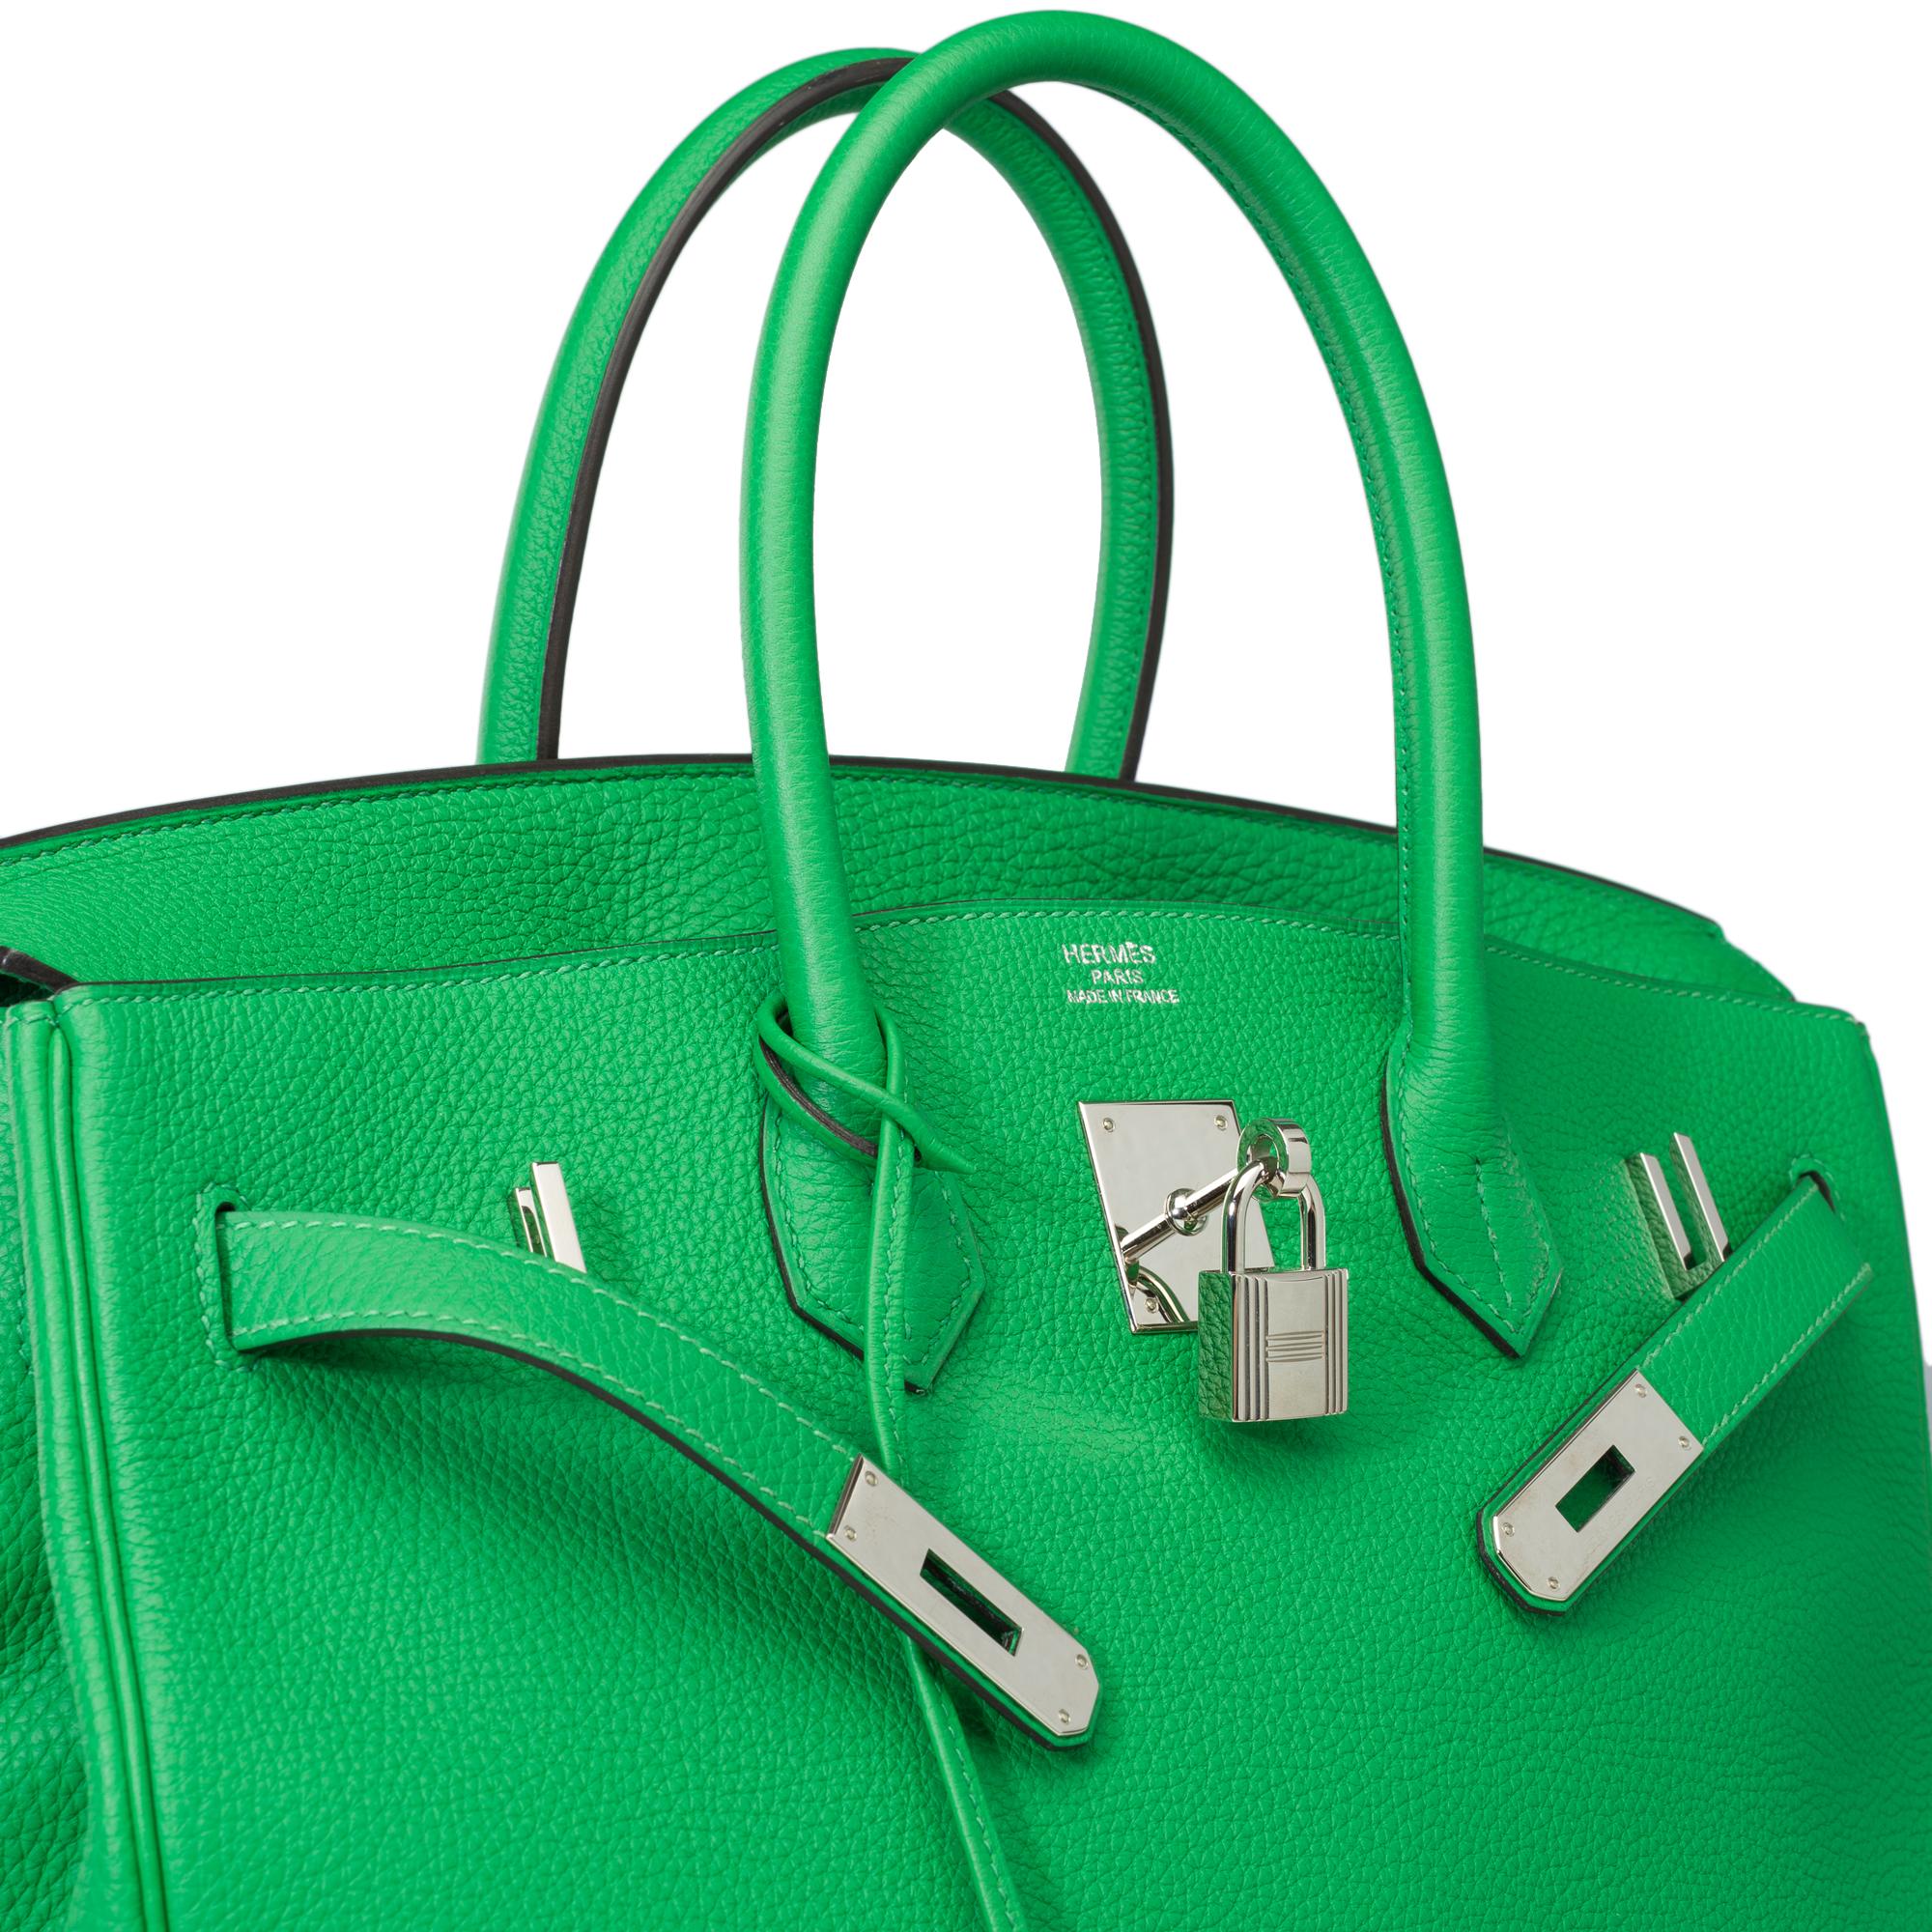 Fantastic Hermès Birkin 35 handbag in Green Bamboo Togo leather, SHW For Sale 4